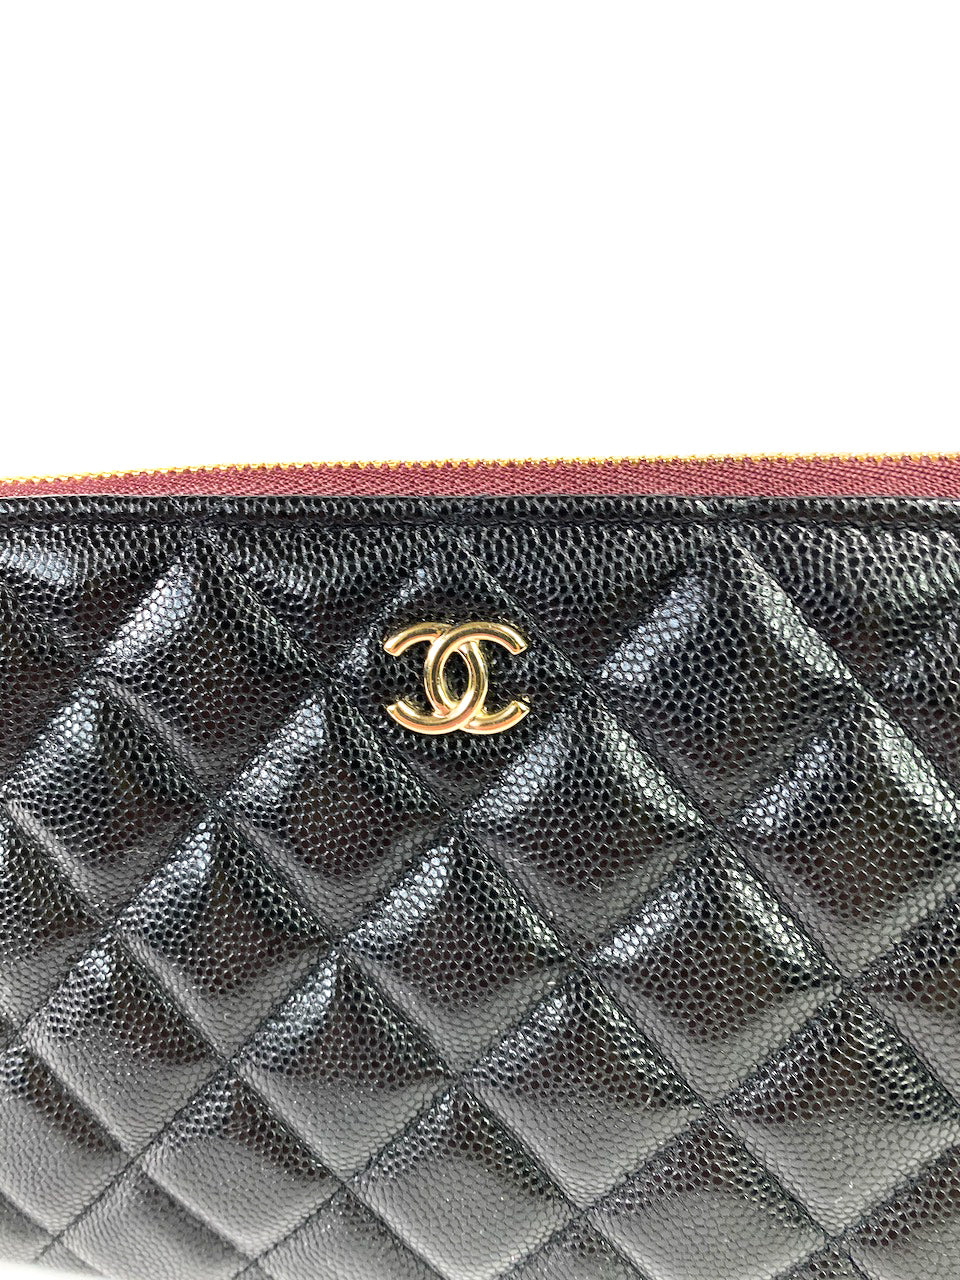 Chanel Black Caviar Leather Clutch - As Seen on Instagram Live 12/07/20 - Siopaella Designer Exchange